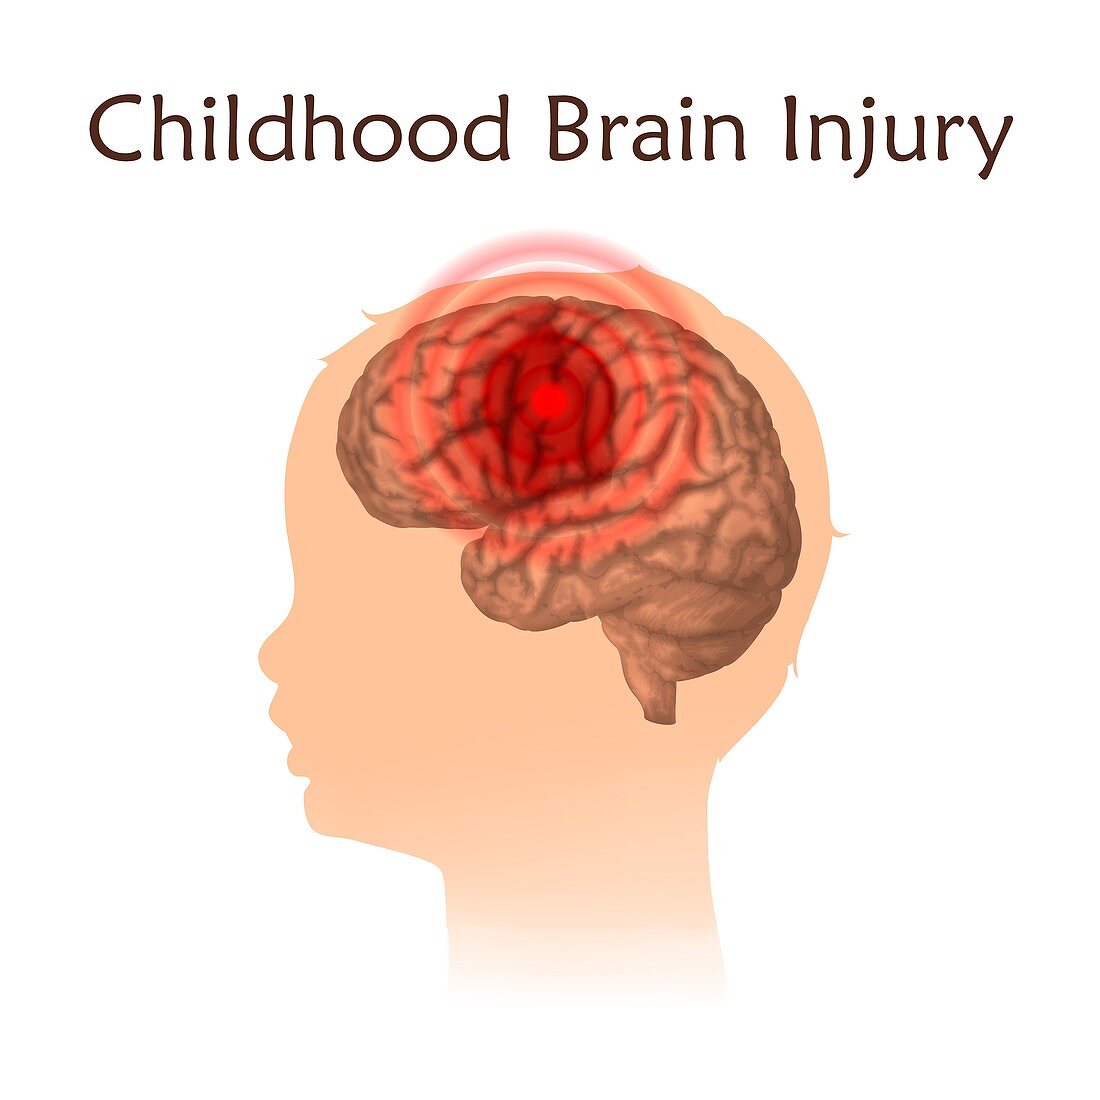 Childhood brain injury, illustration